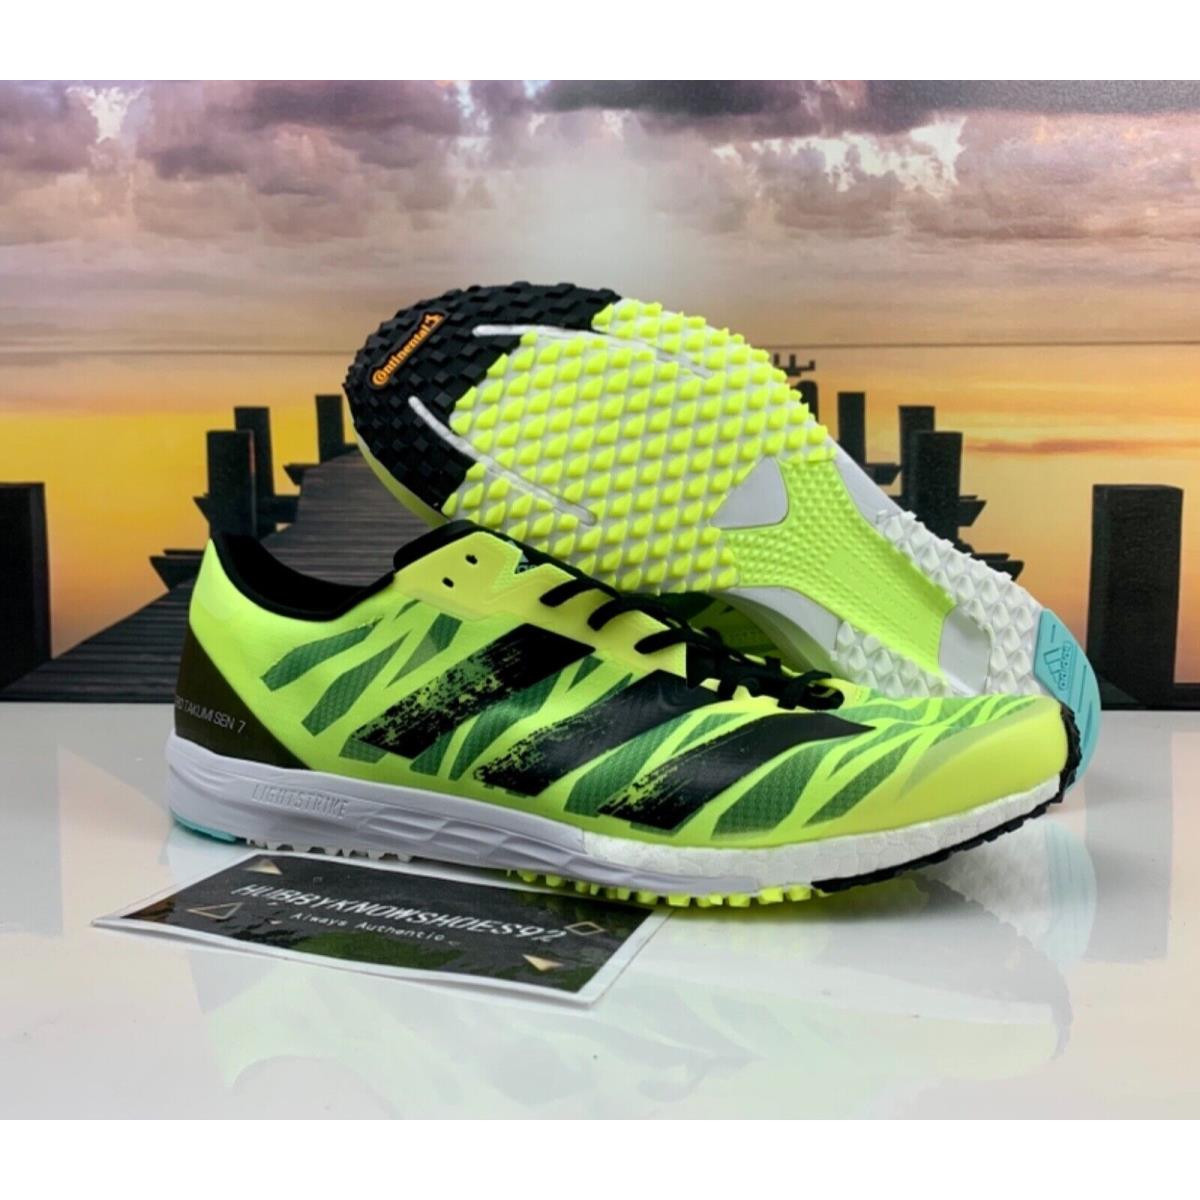 Adidas Adizero Takumi Sen 7 Sunrise Pack Running Shoes Men`s Size 11.5 12 13